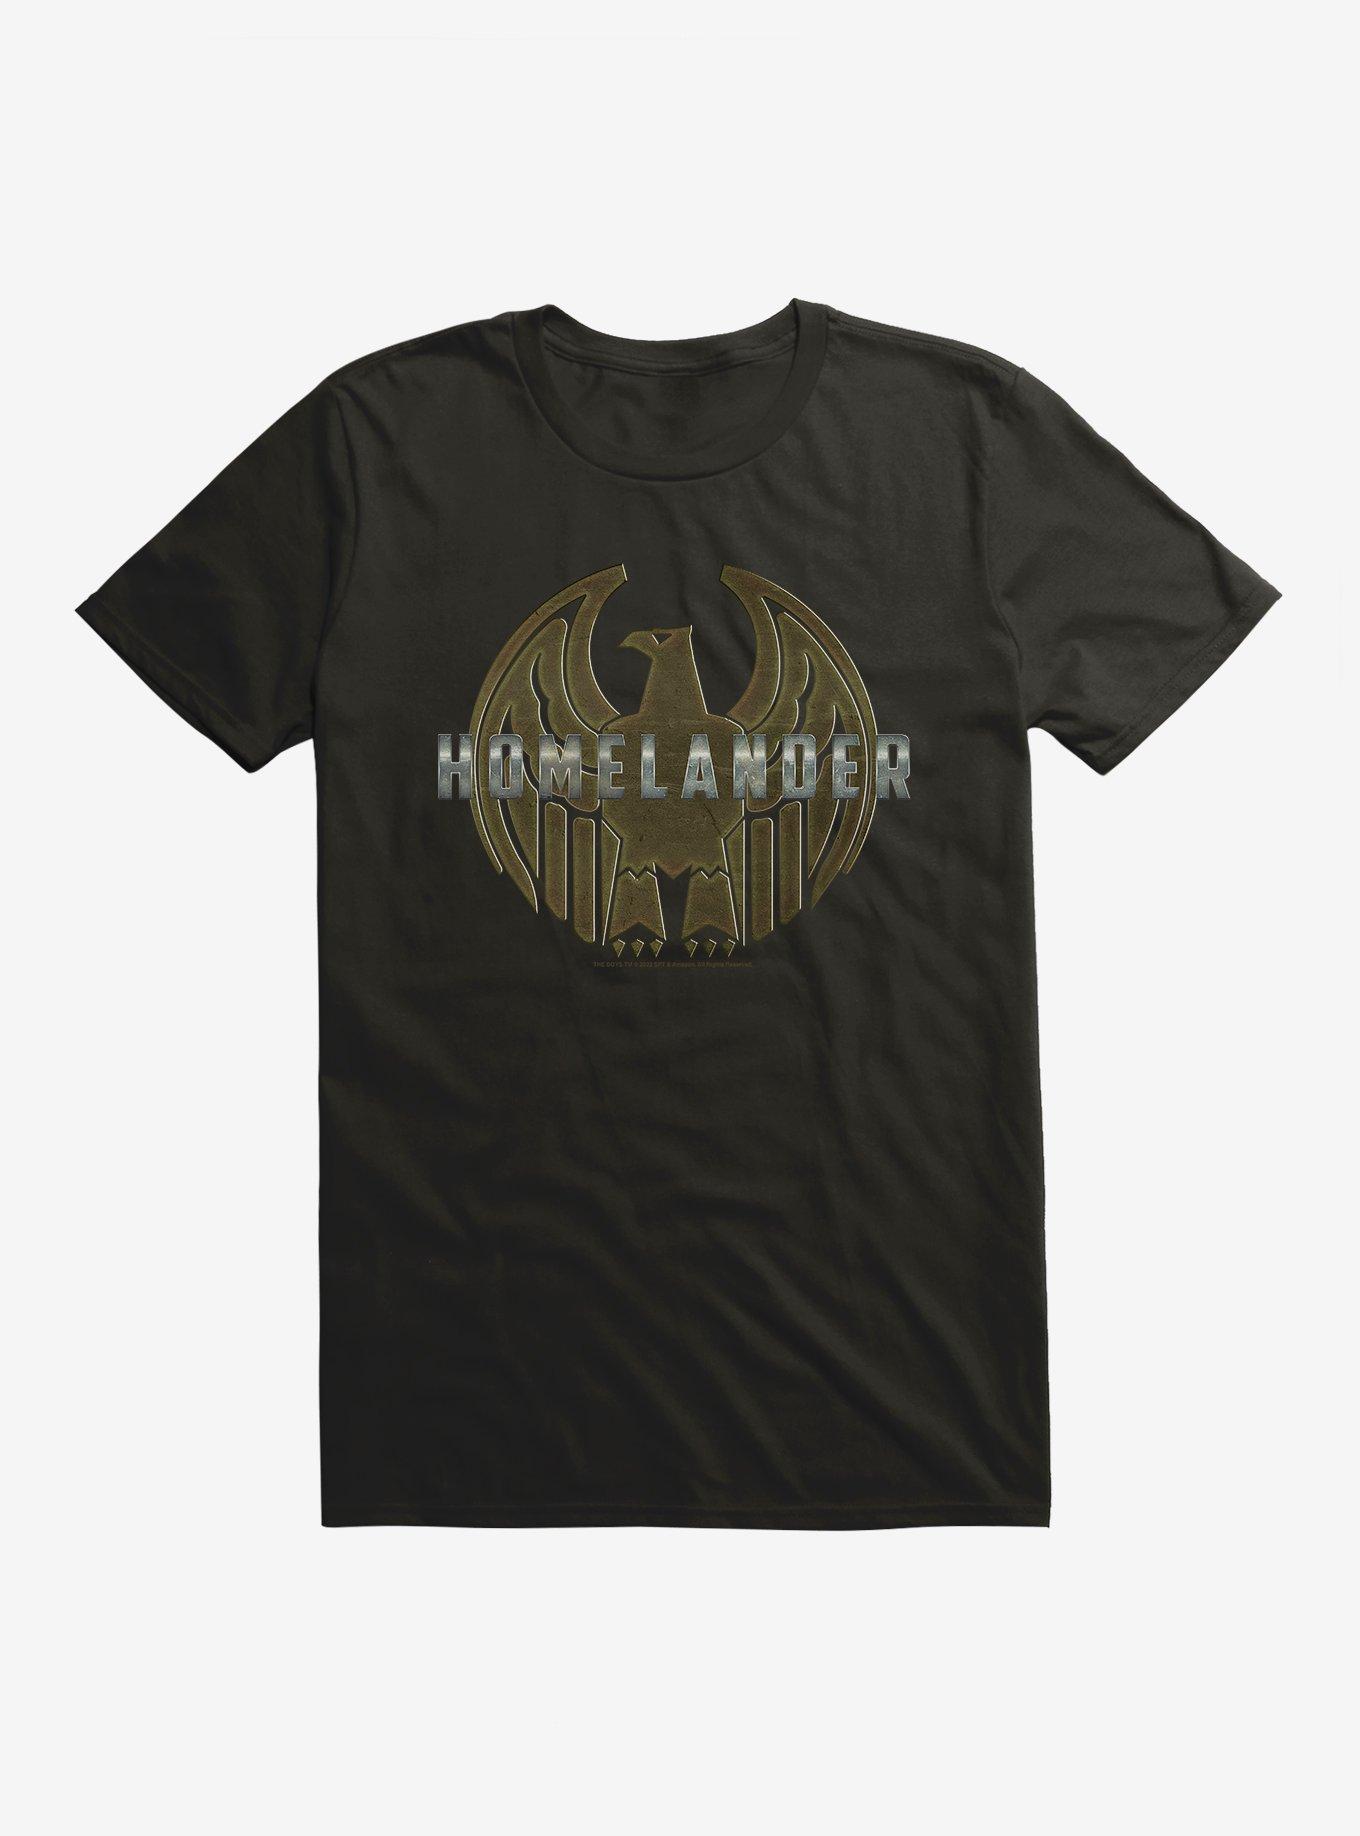 The Boys Homelander Logo T-Shirt | BoxLunch